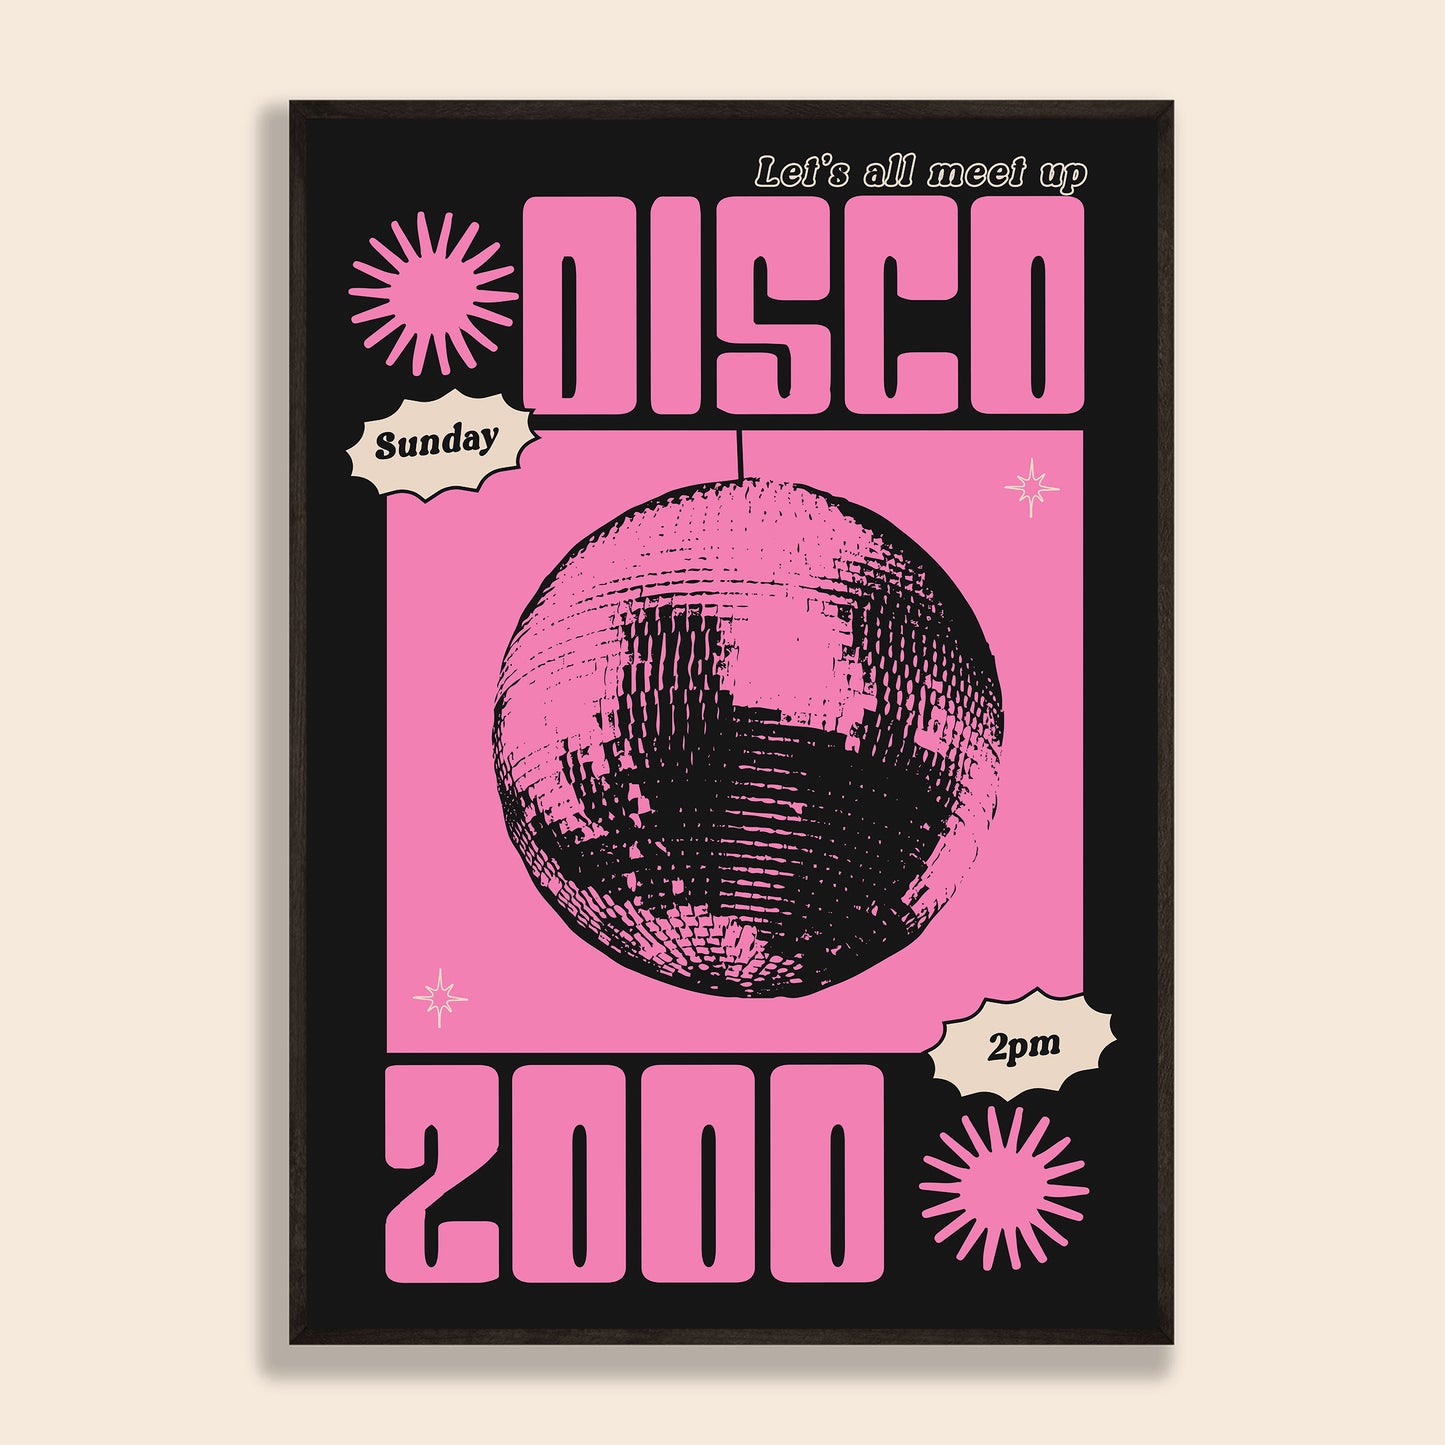 Disco 2000 Print